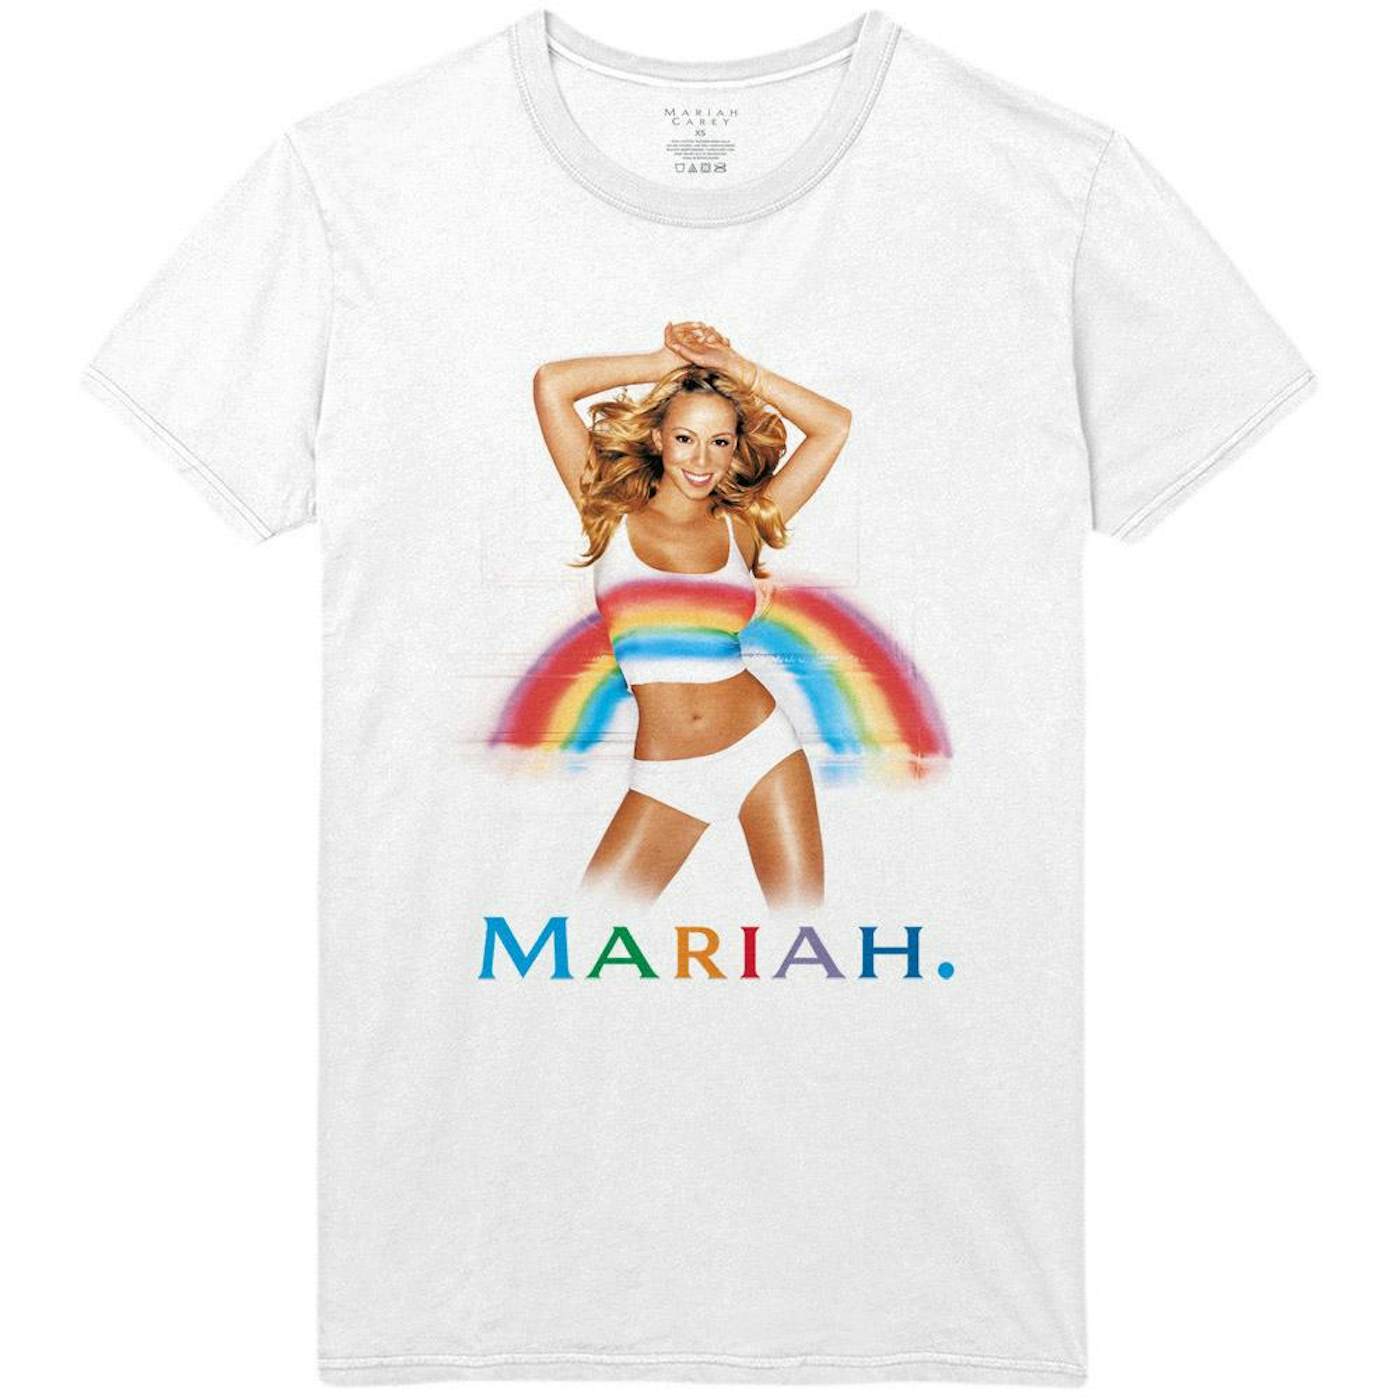 Mariah Carey Rainbow Photo Tee